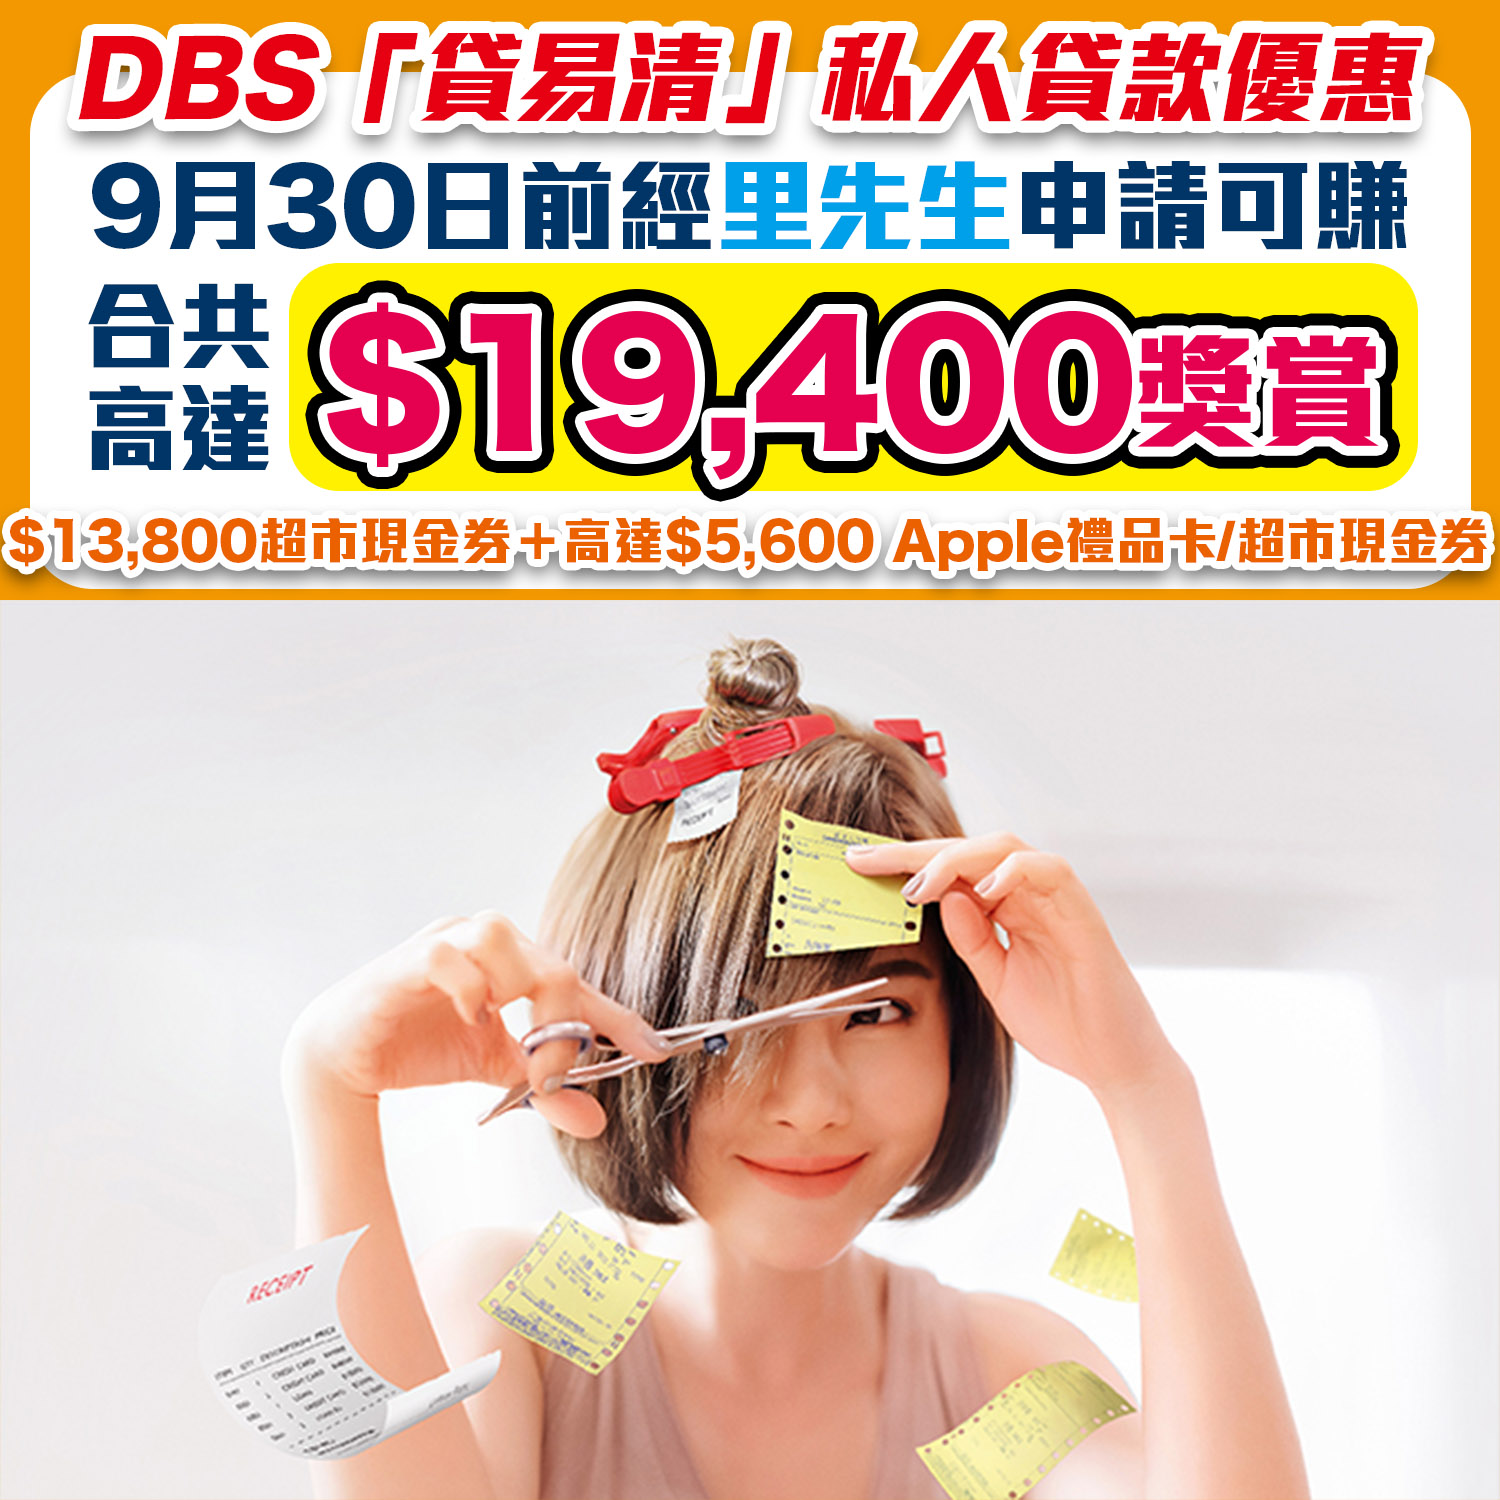 【DBS「貸易清」私人貸款】經里先生成功申請可享高達HK$19,400獎賞！新舊客戶都有優惠！